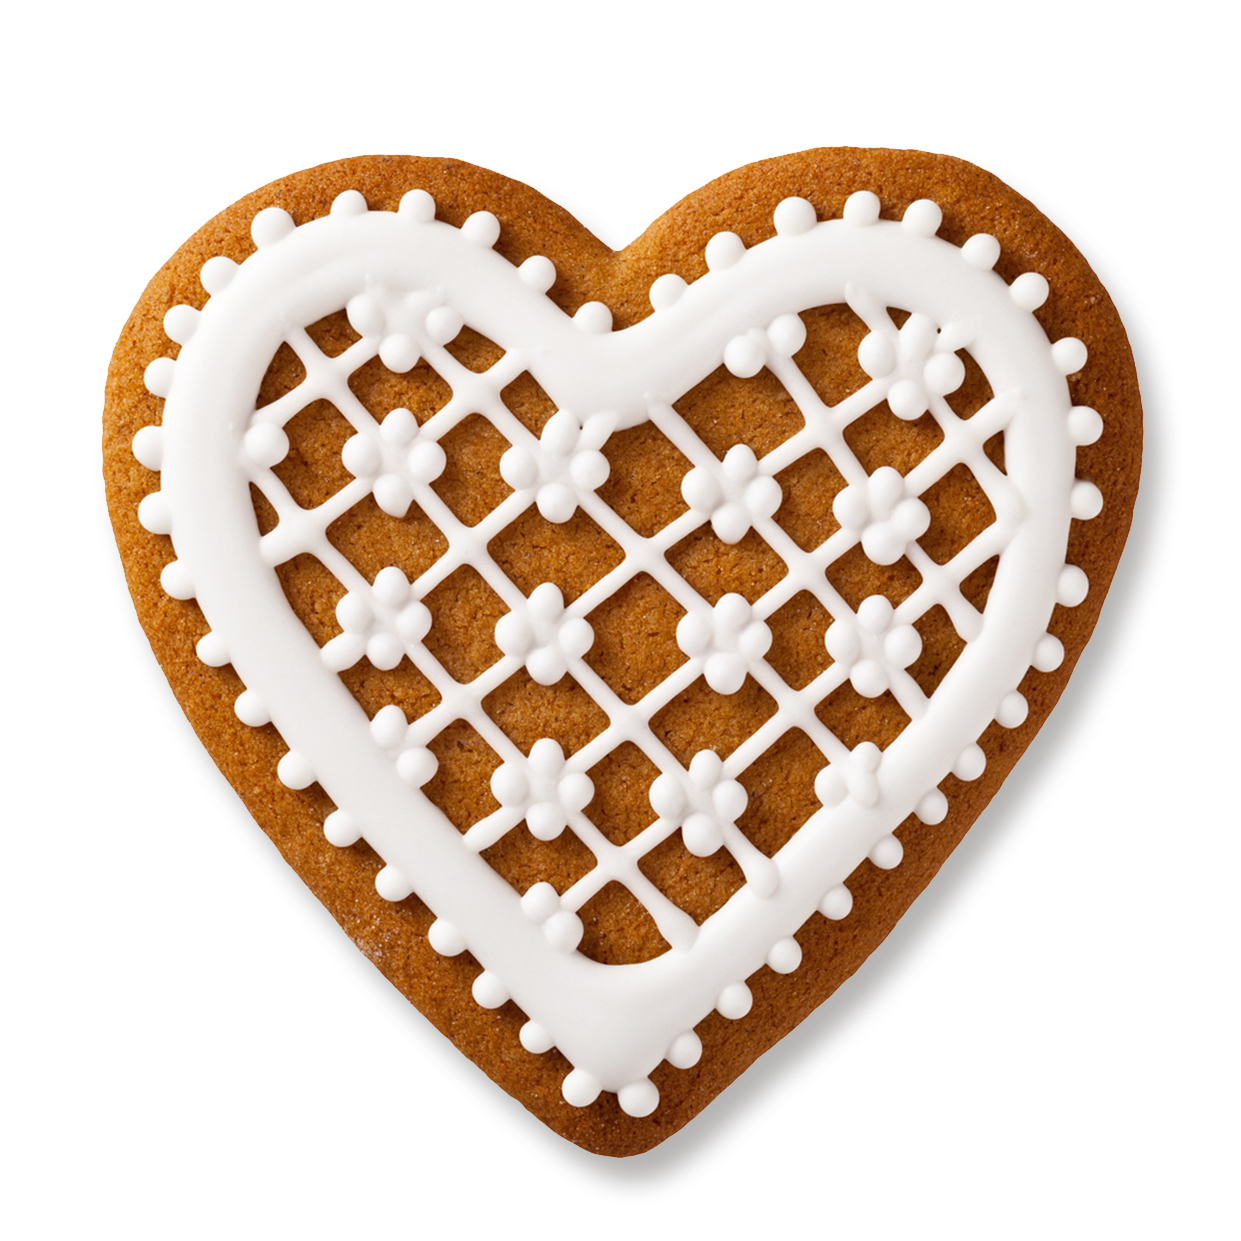 Gingerbread Heart - sent on November 19th, 2022